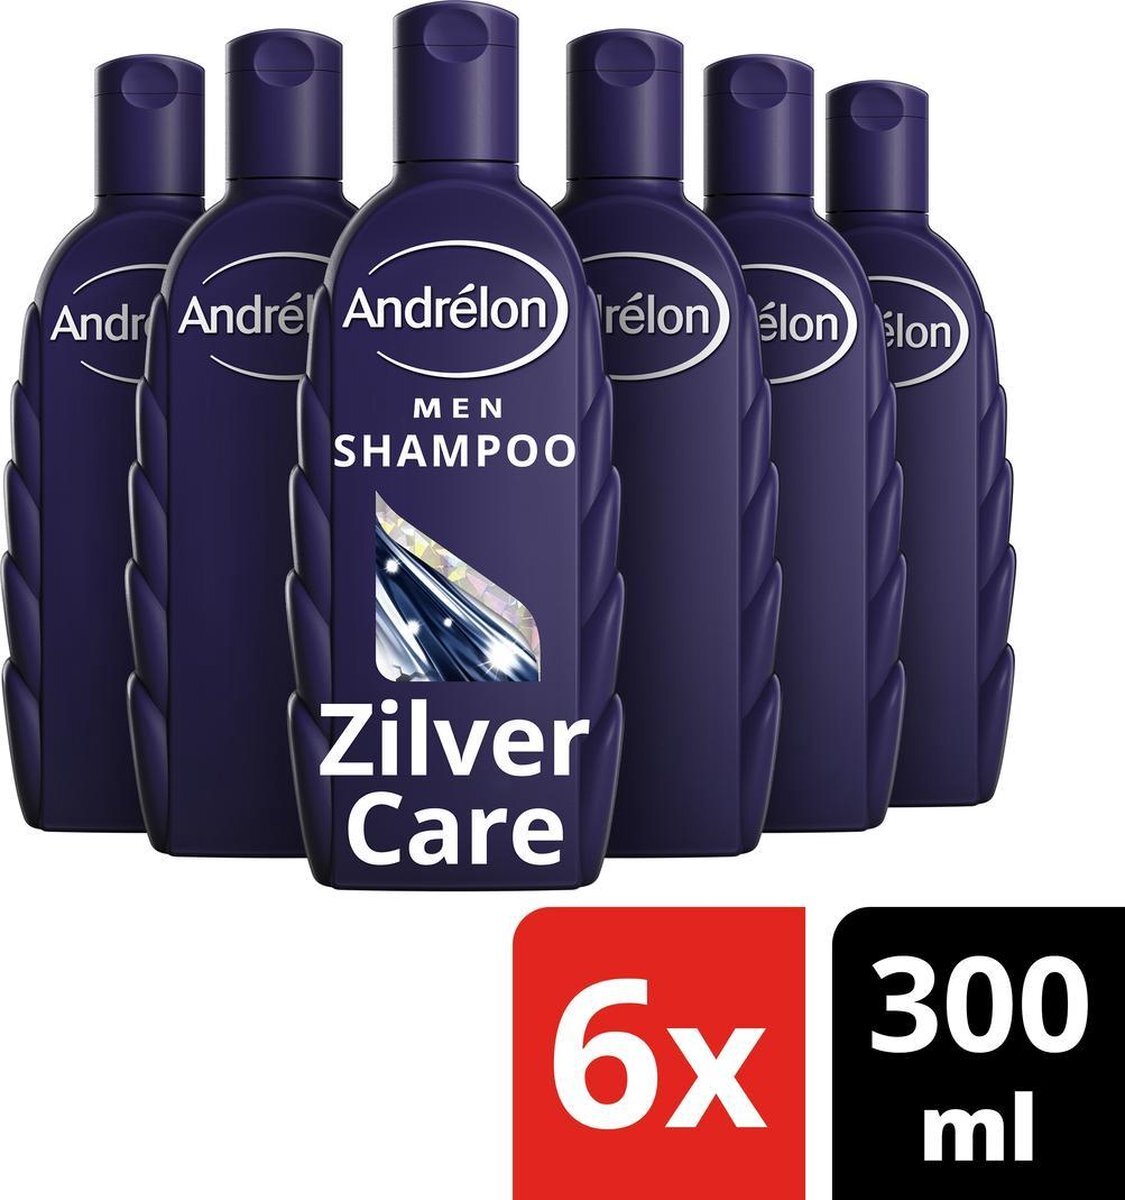 Andrélon Zilver Care Men shampoo - 6 x 300 ml